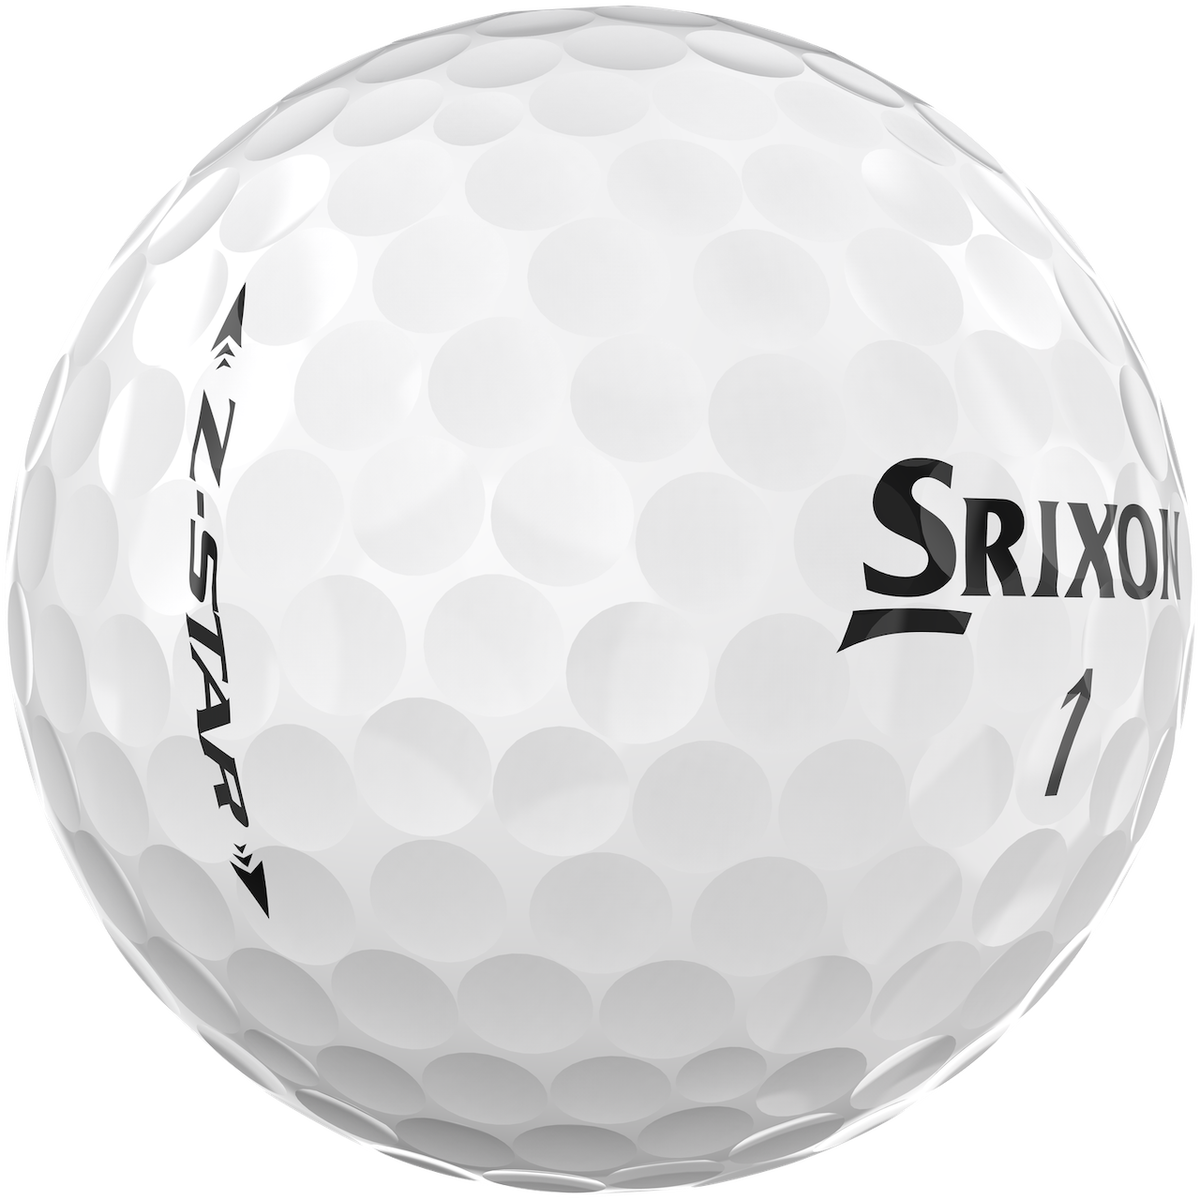 Srixon Z Star golf ball